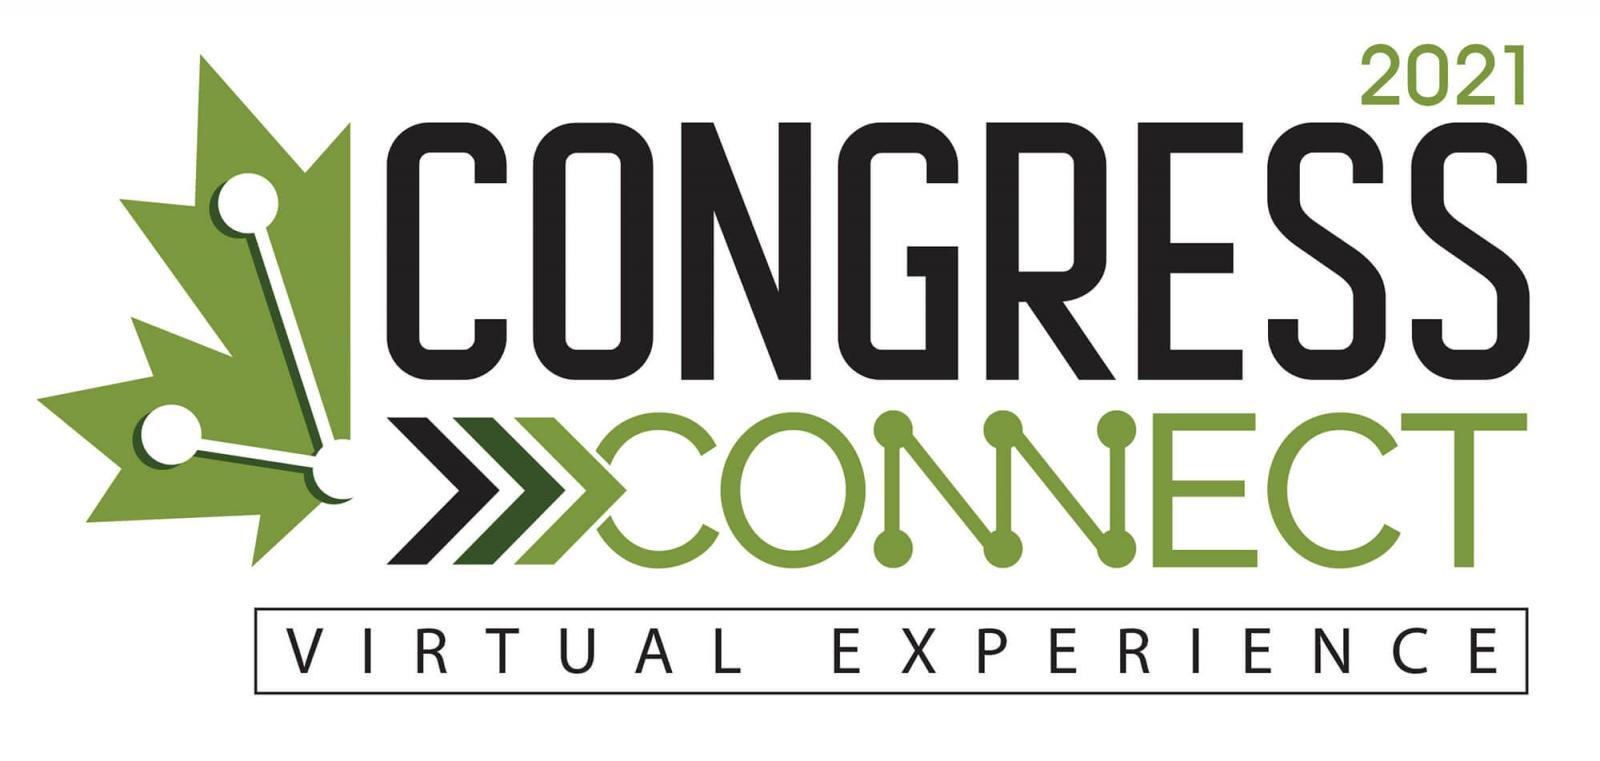 Introducing Congress Connect — Congress 2021 goes virtual